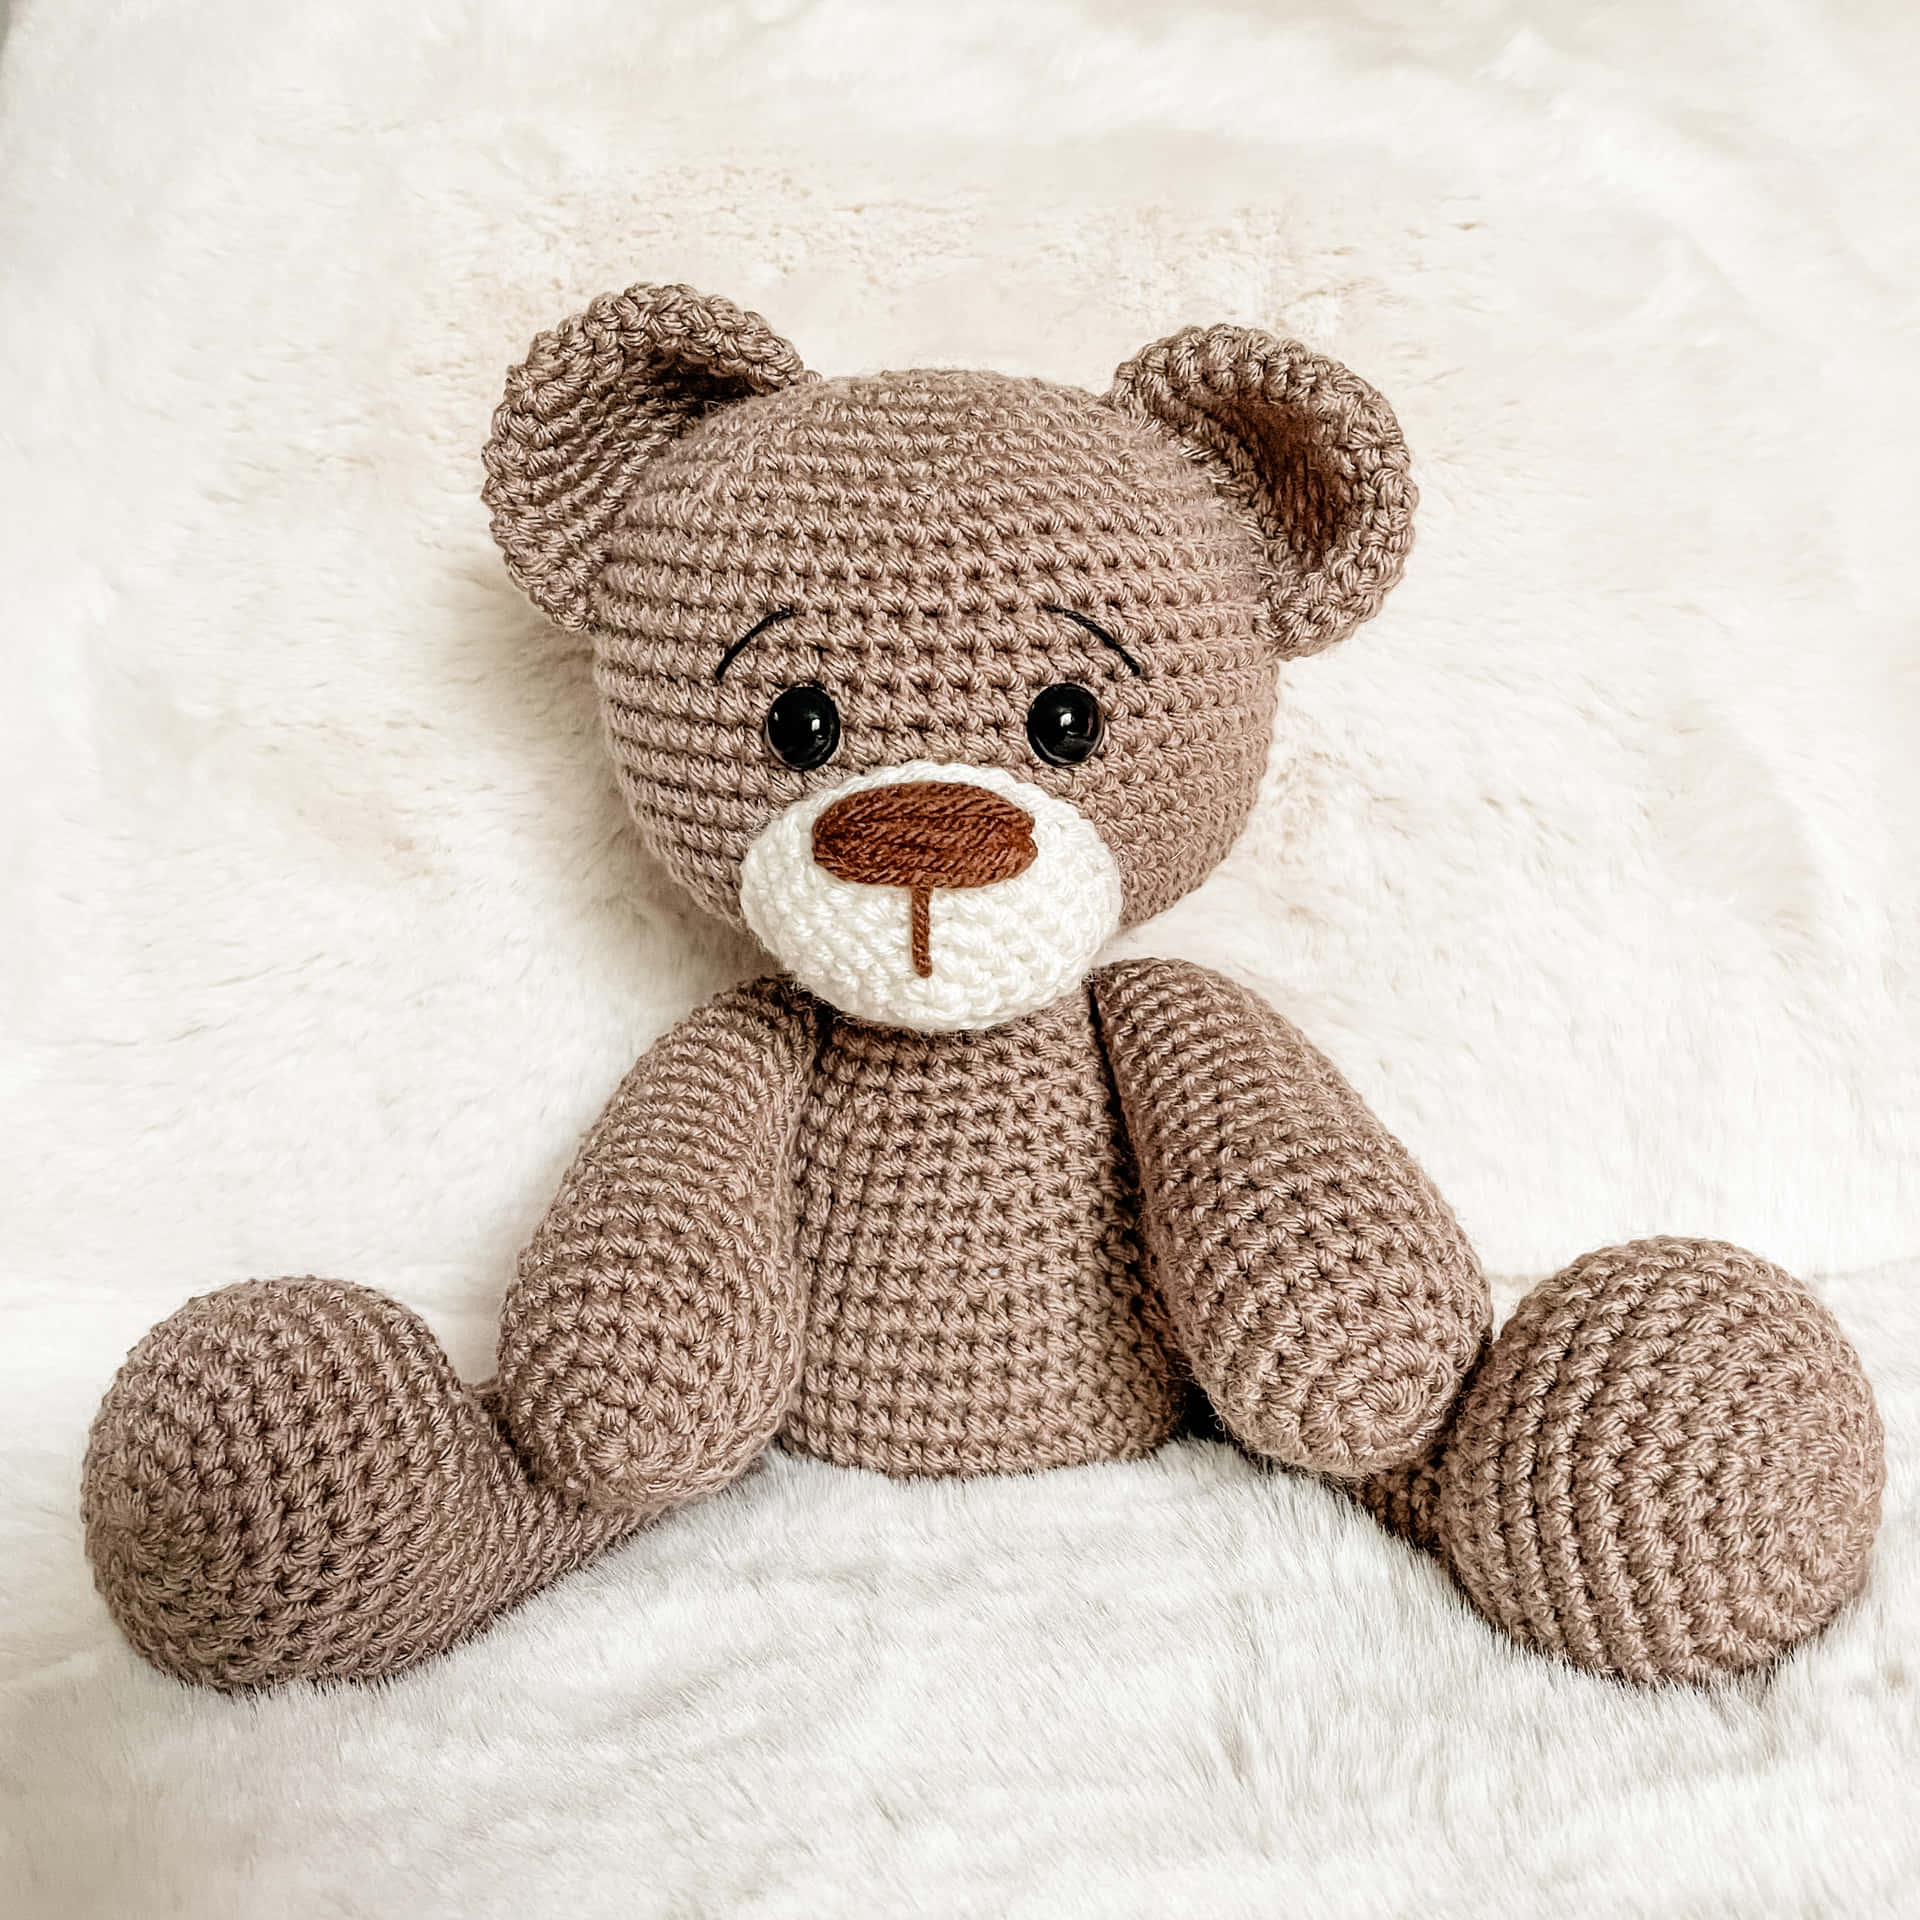 A Crocheted Teddy Bear Sitting On A White Blanket